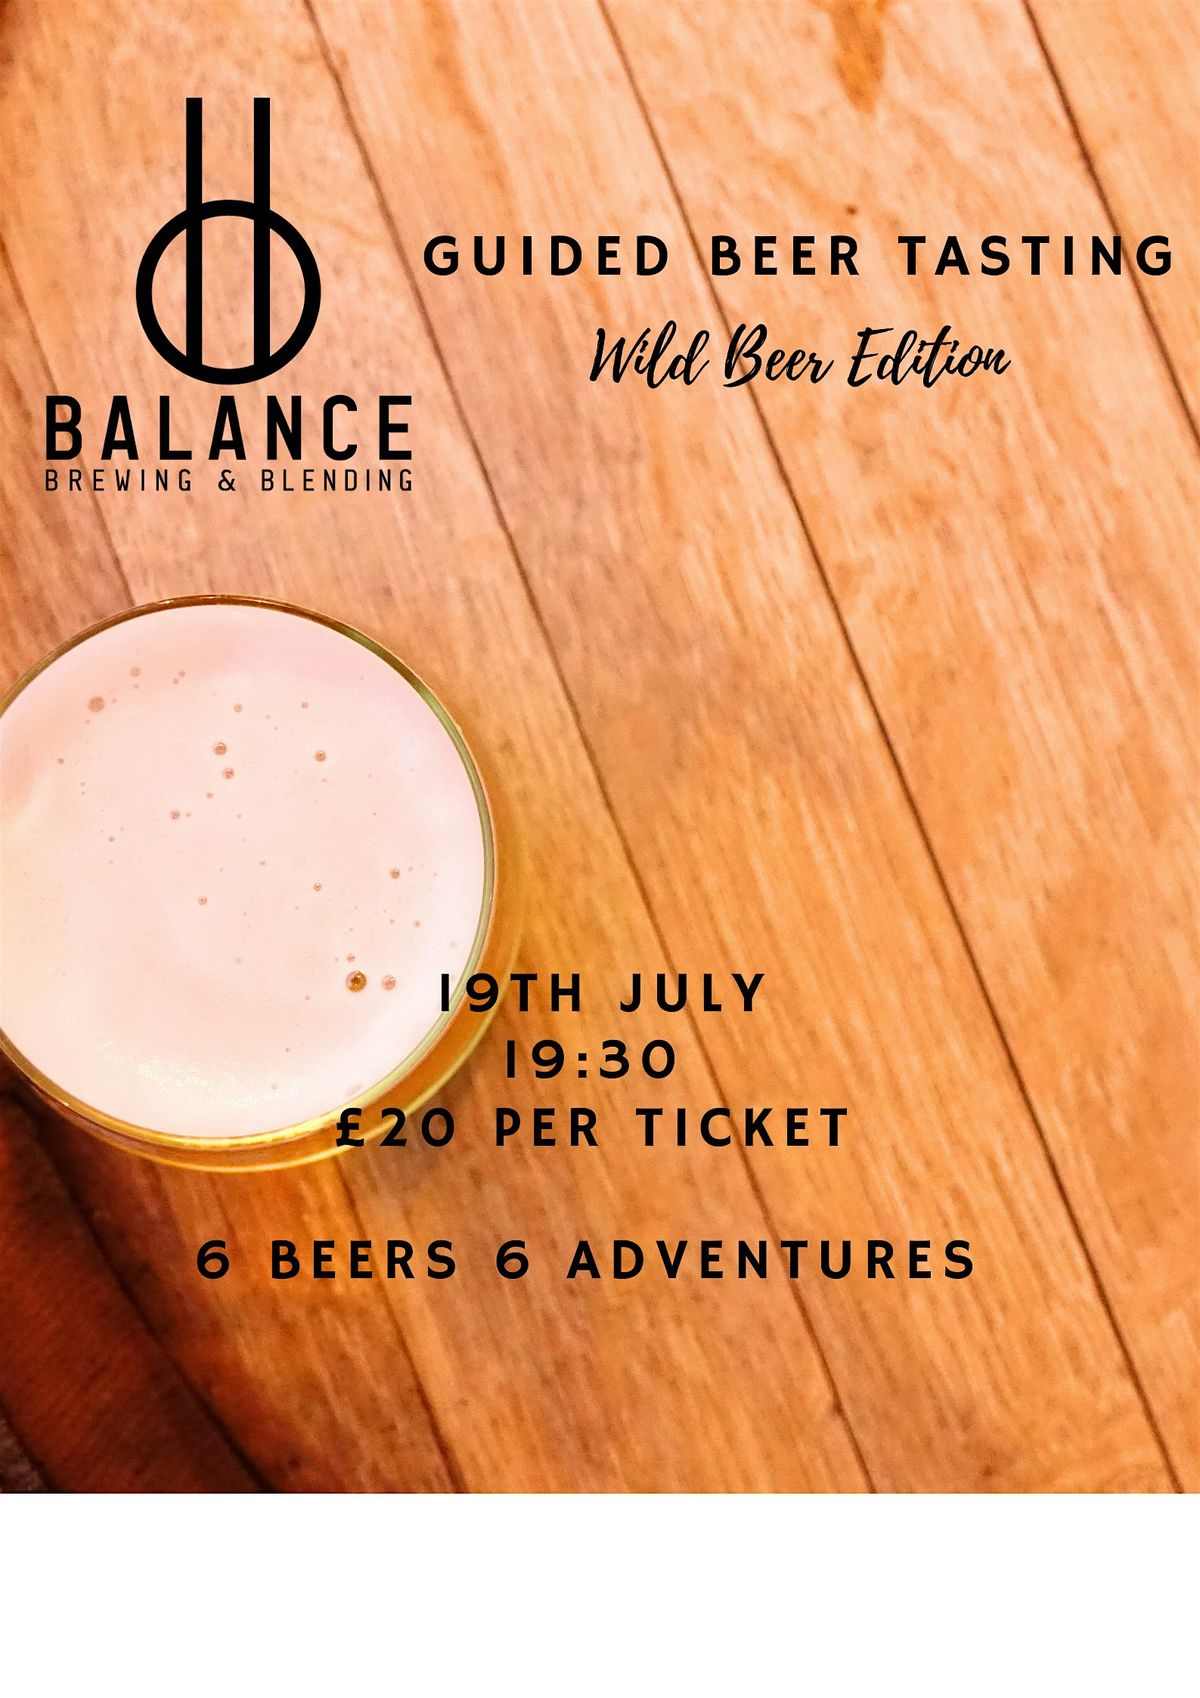 Balance Brewing & Blending Guided Beer Tasting